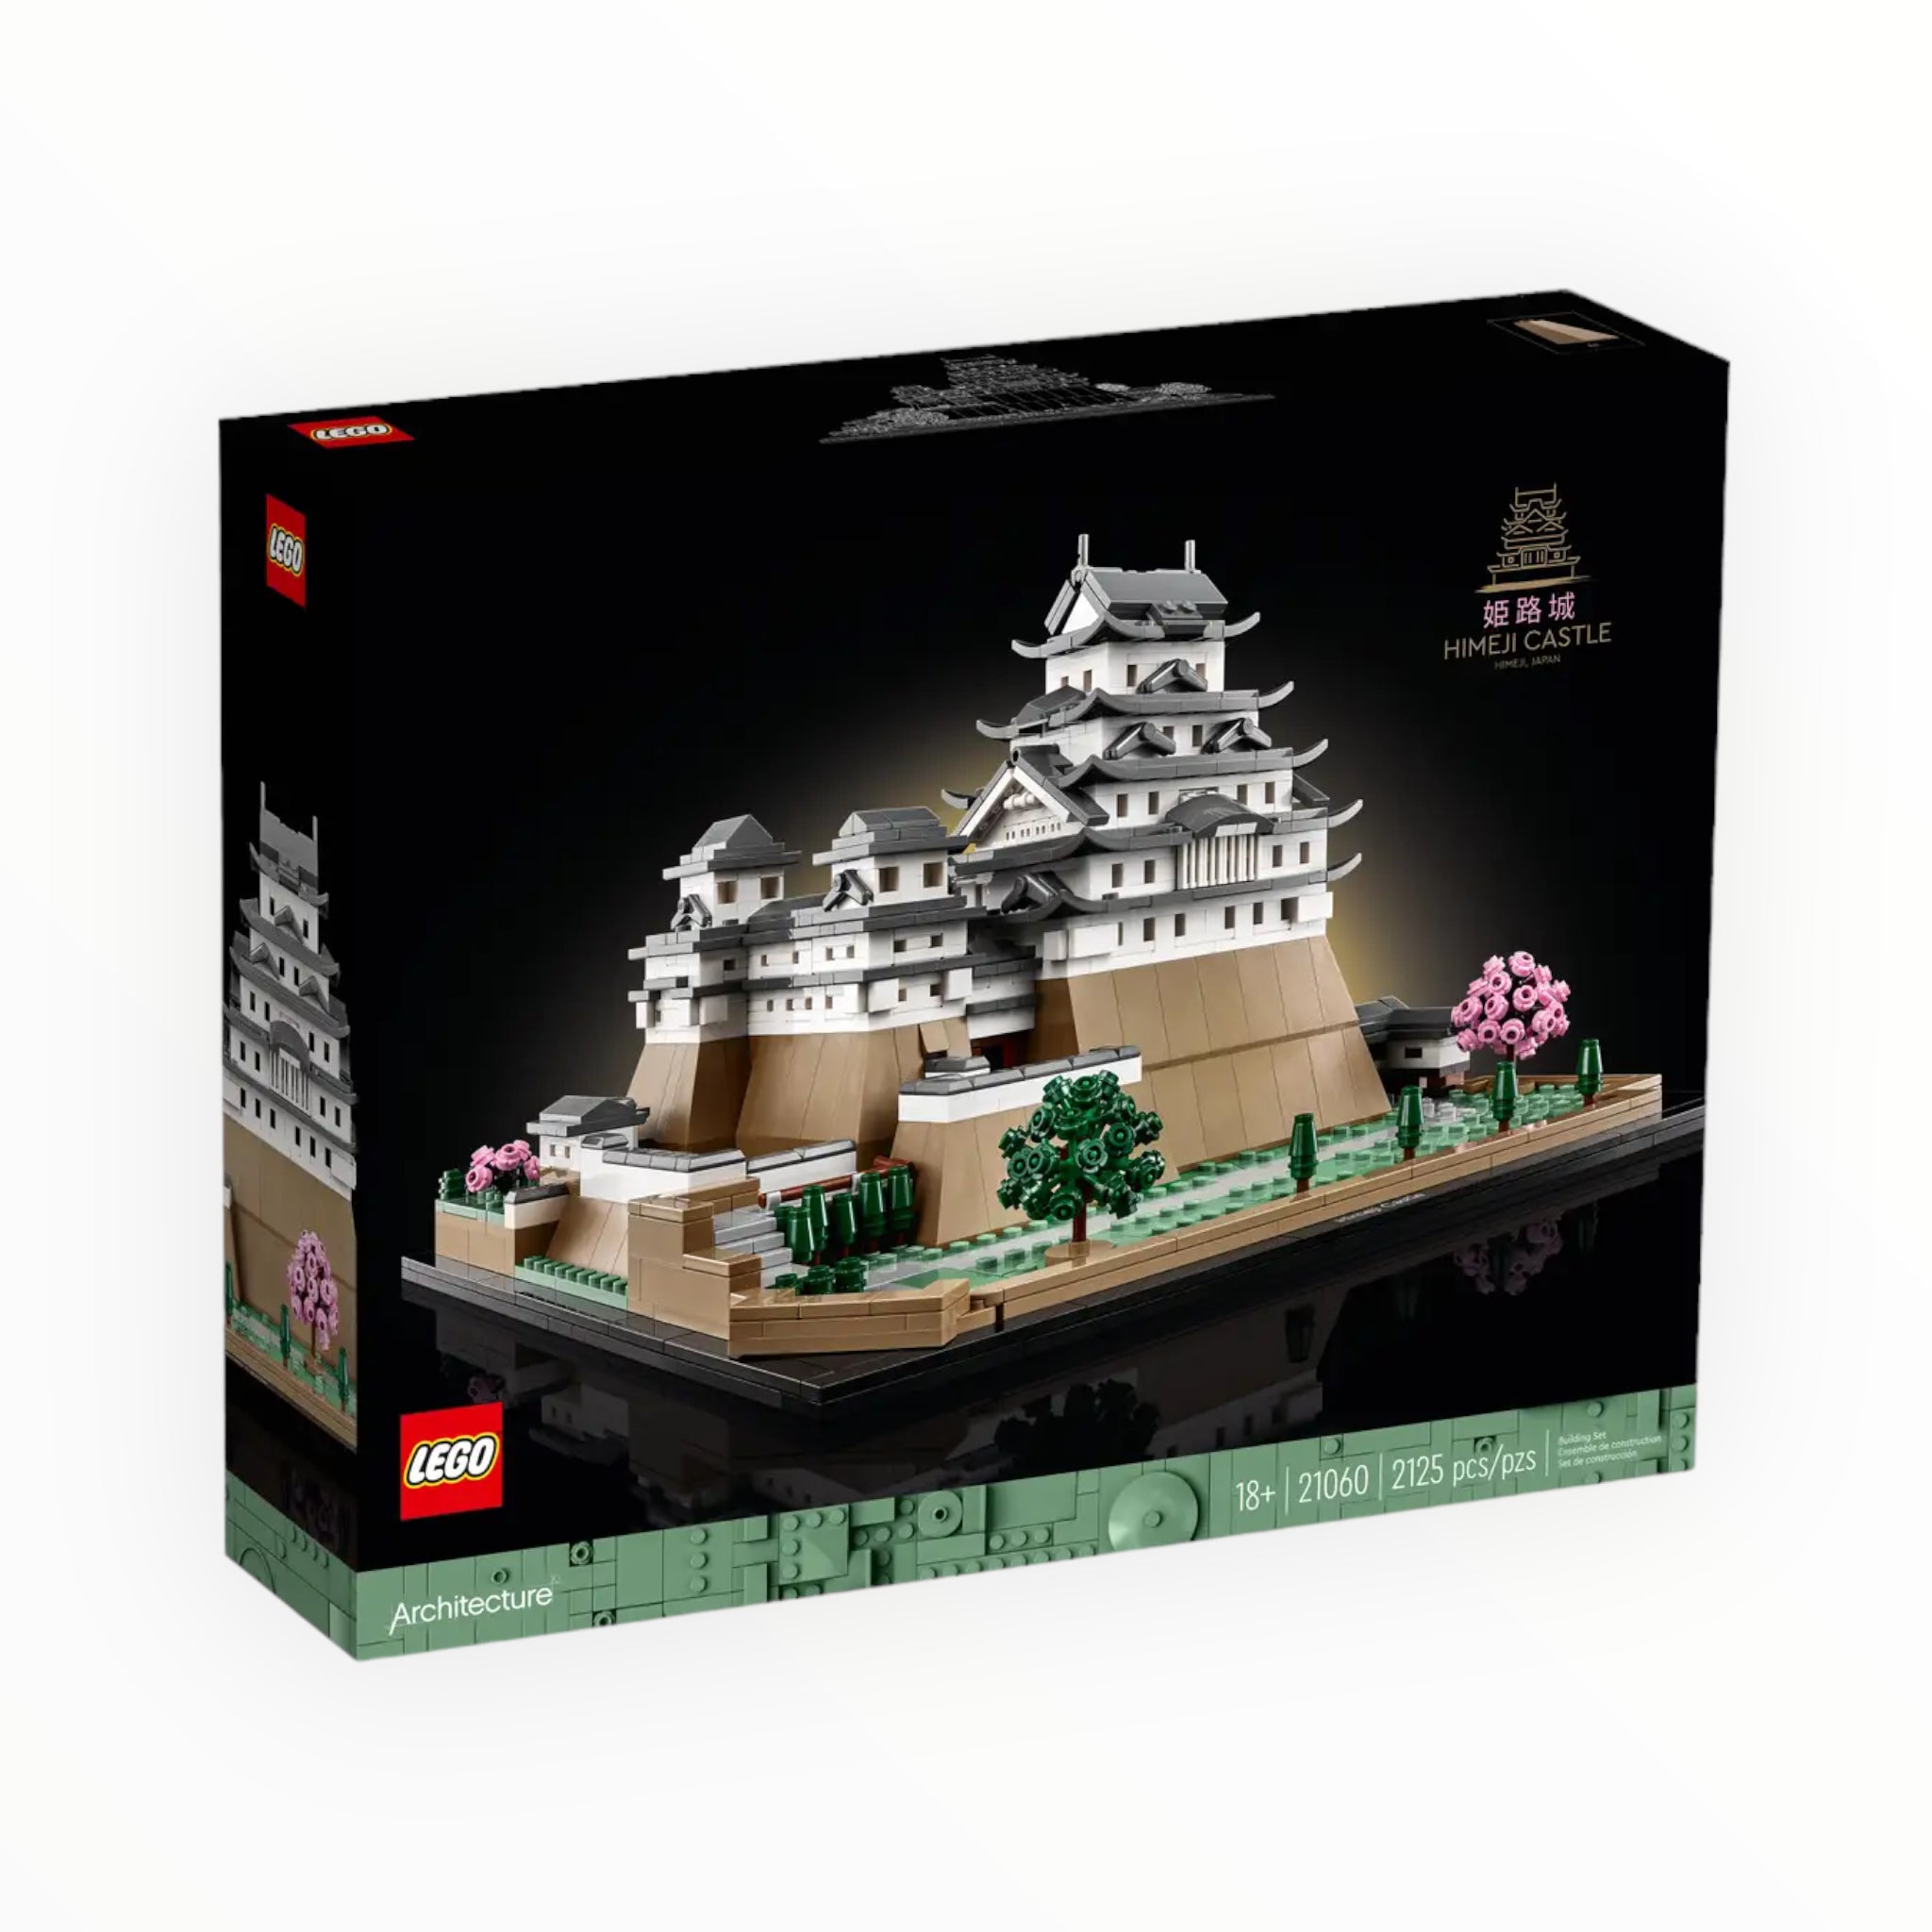 21060 Architecture Himeji Castle